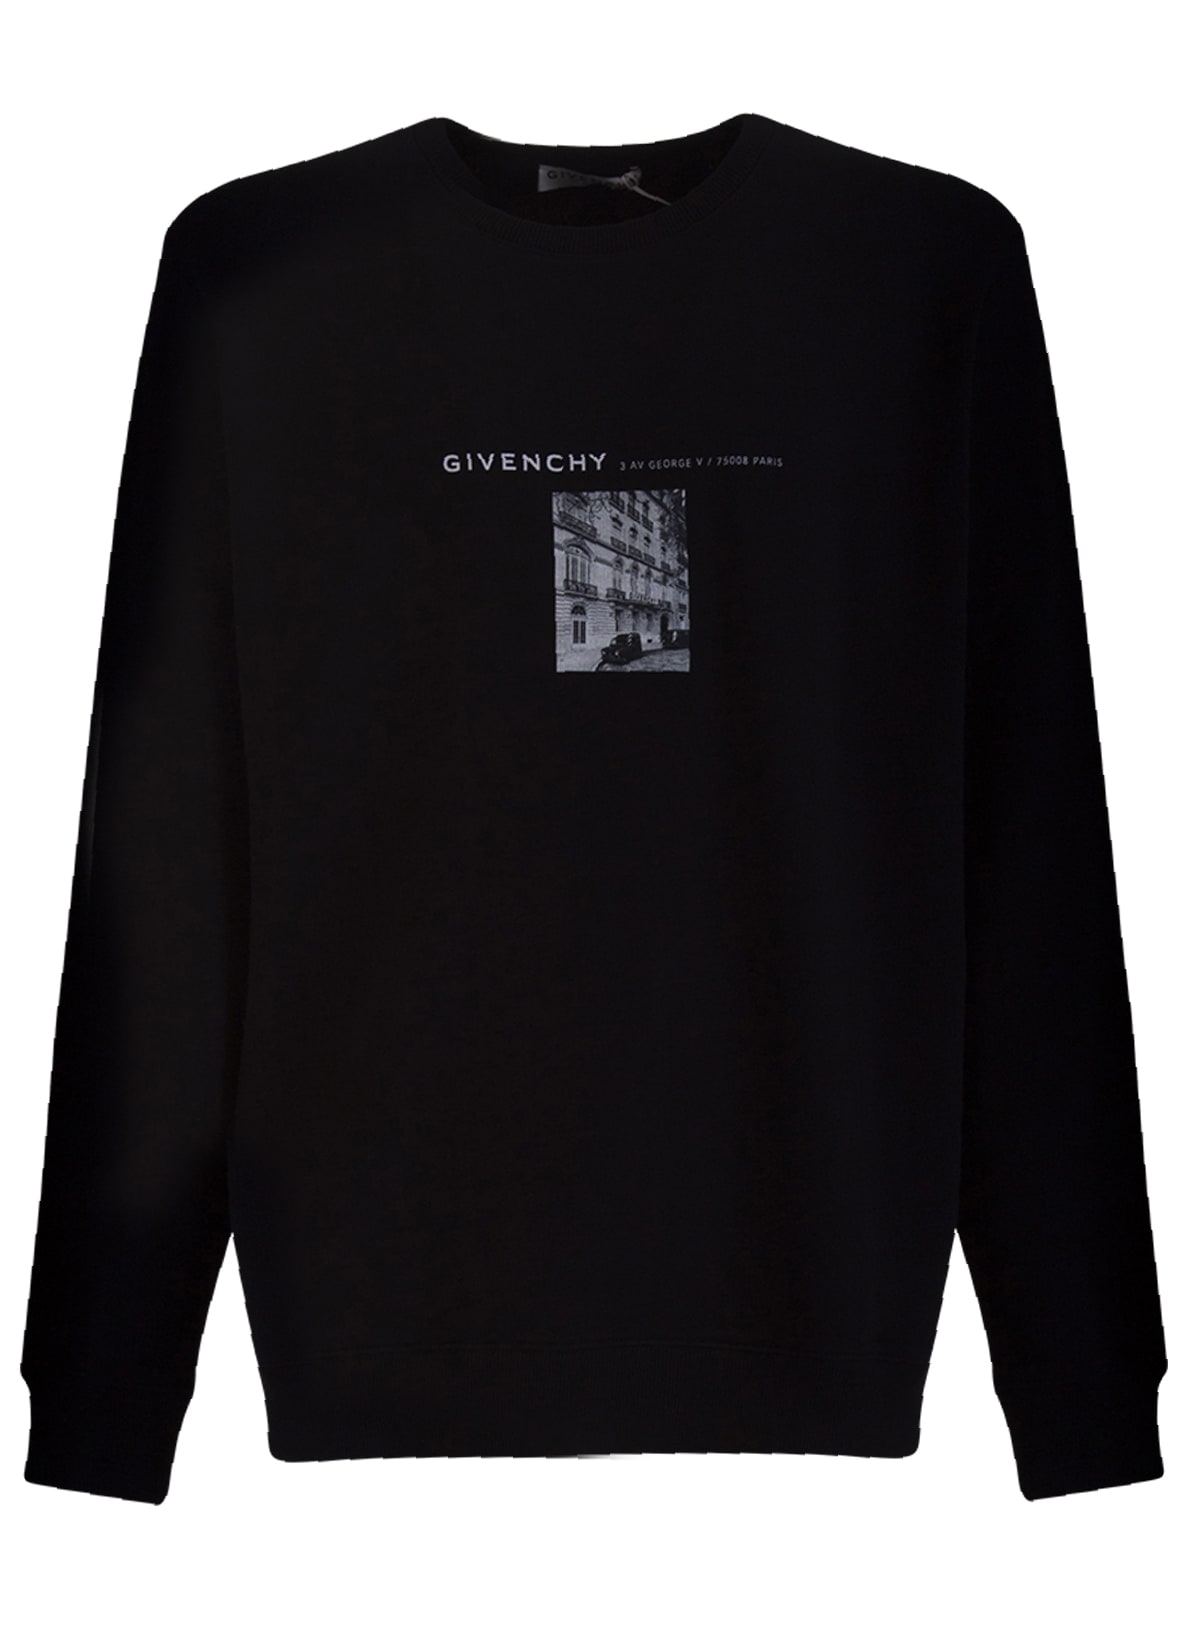 Givenchy Photograph Print Crew Neck Sweatshirt